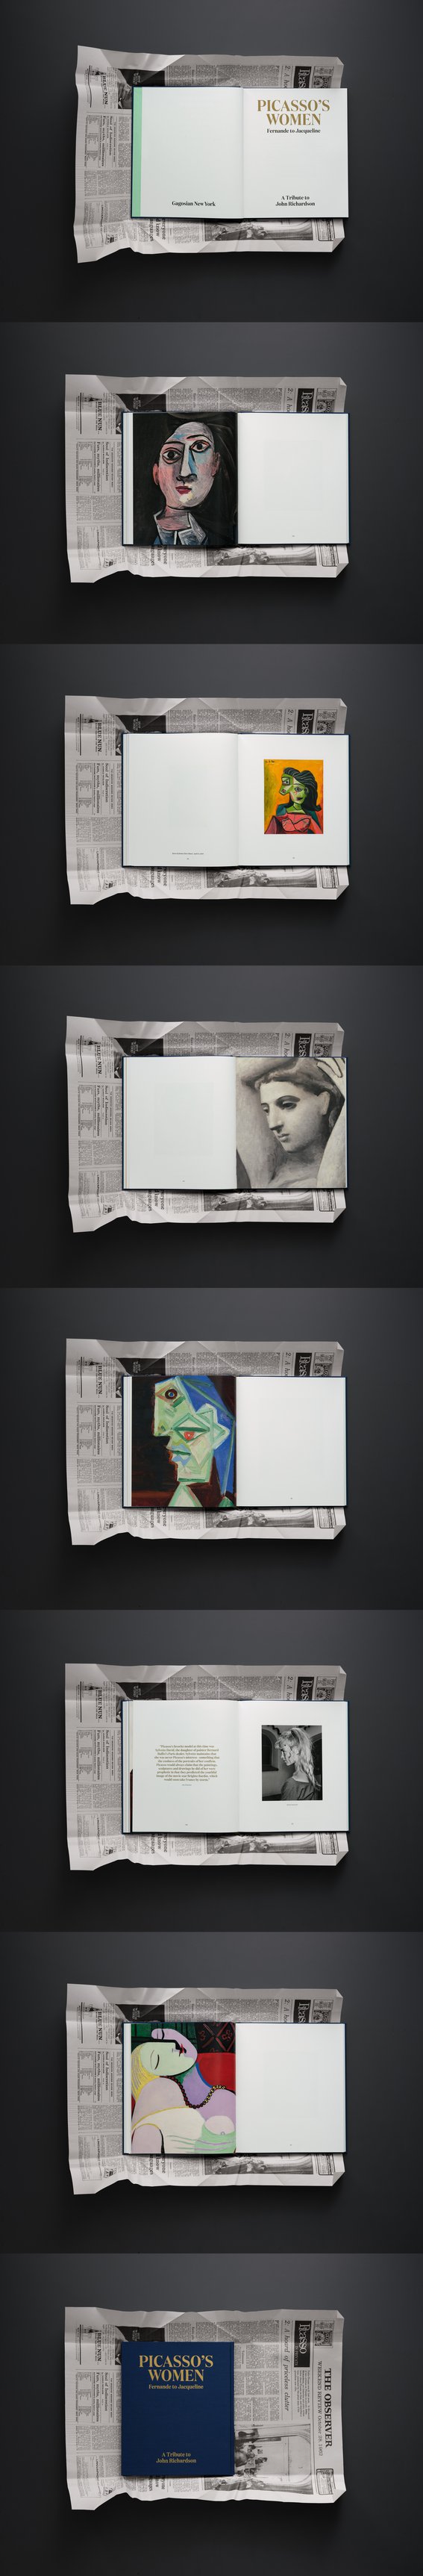 Gagosian – Picasso’s Women, 2019 (Publication), image 3